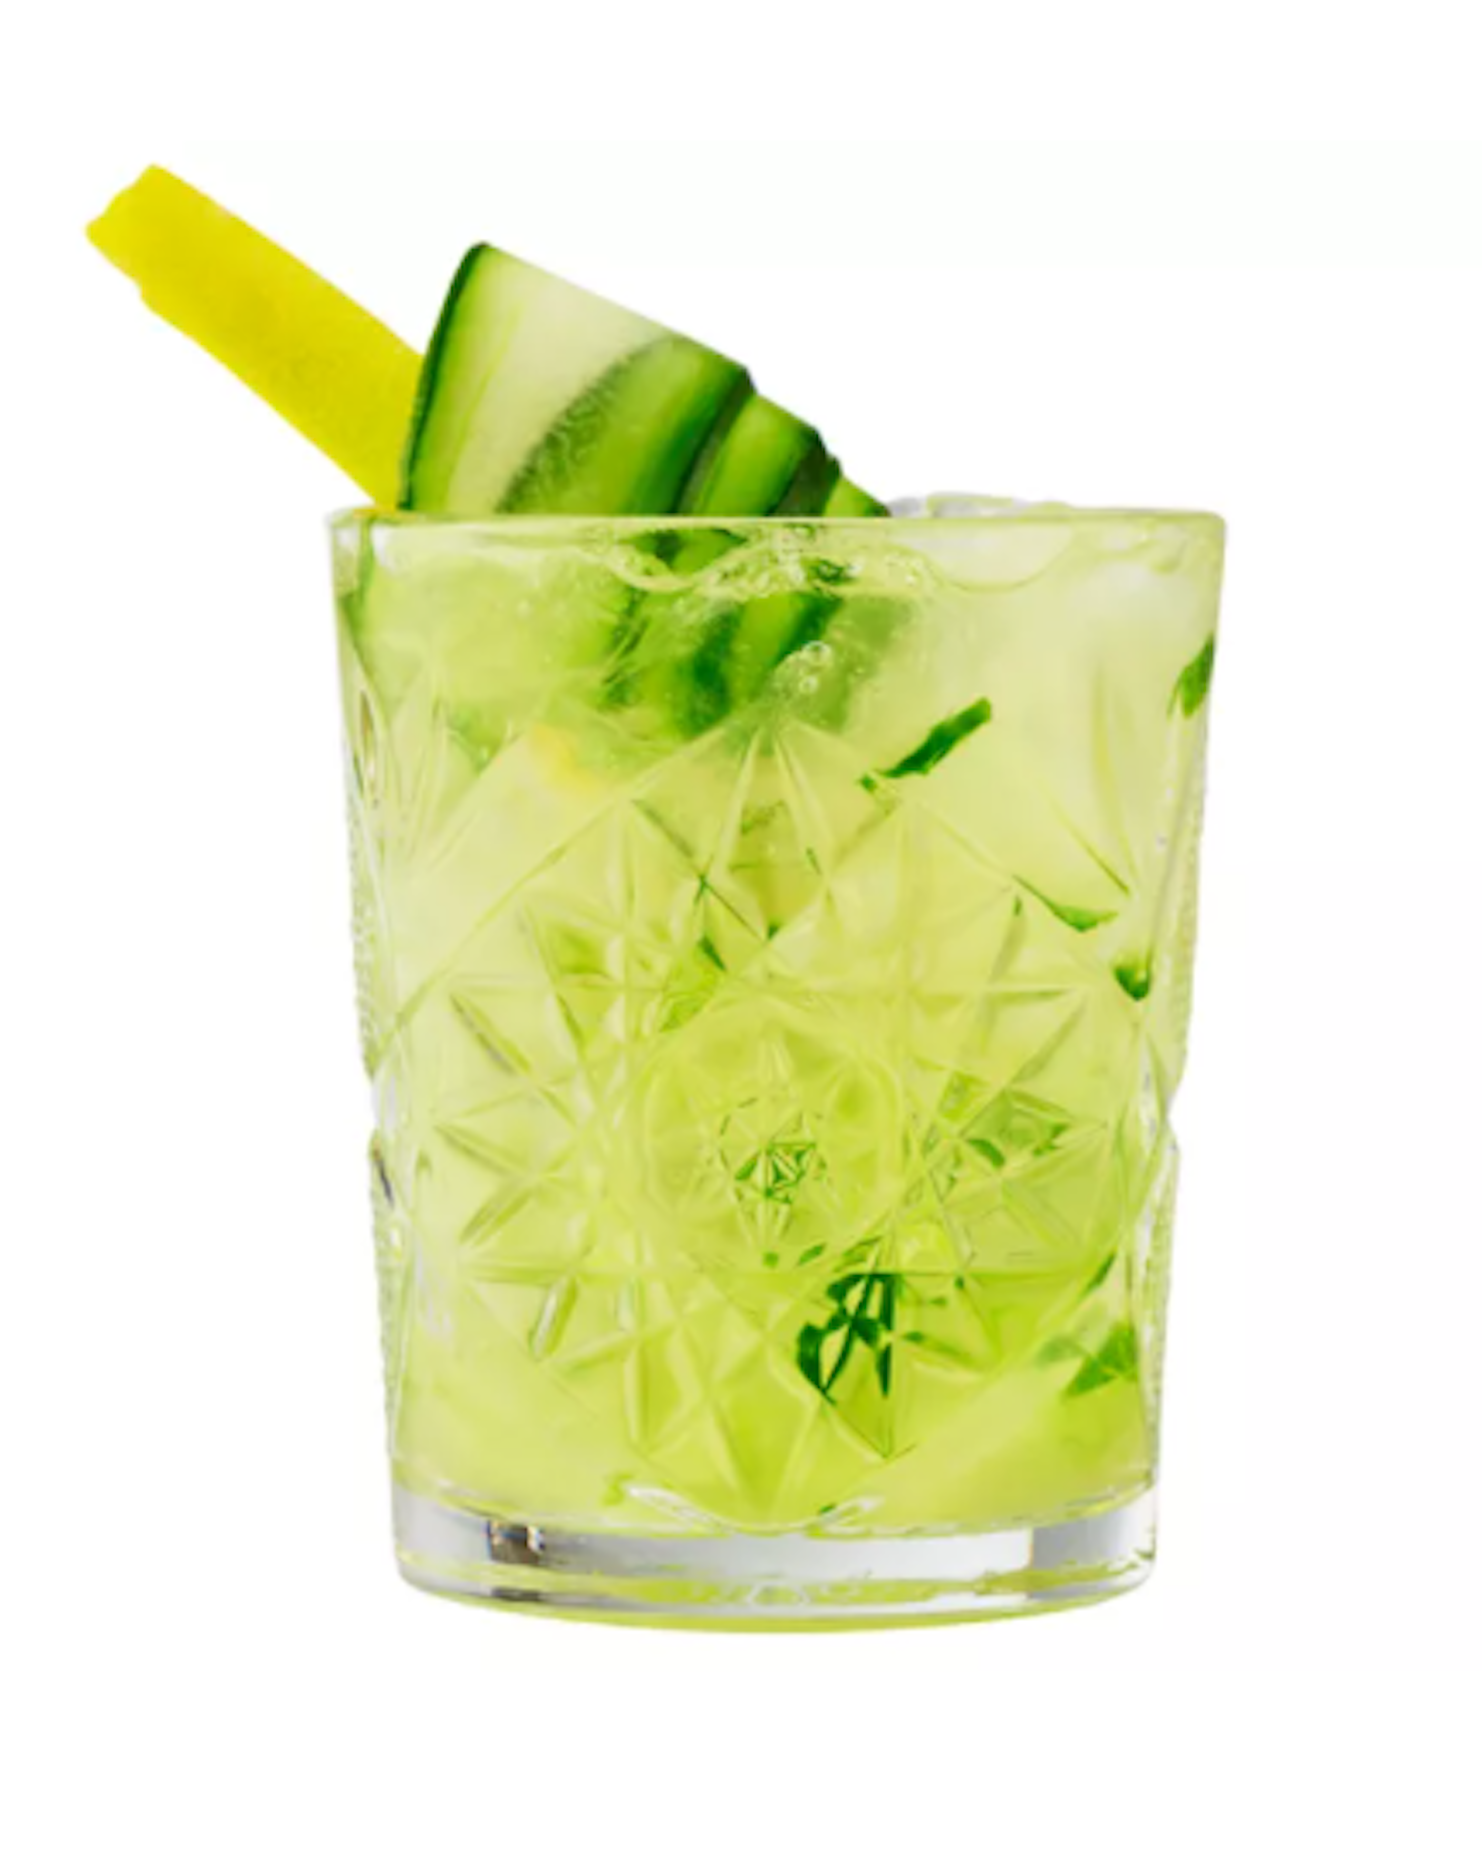 green drink